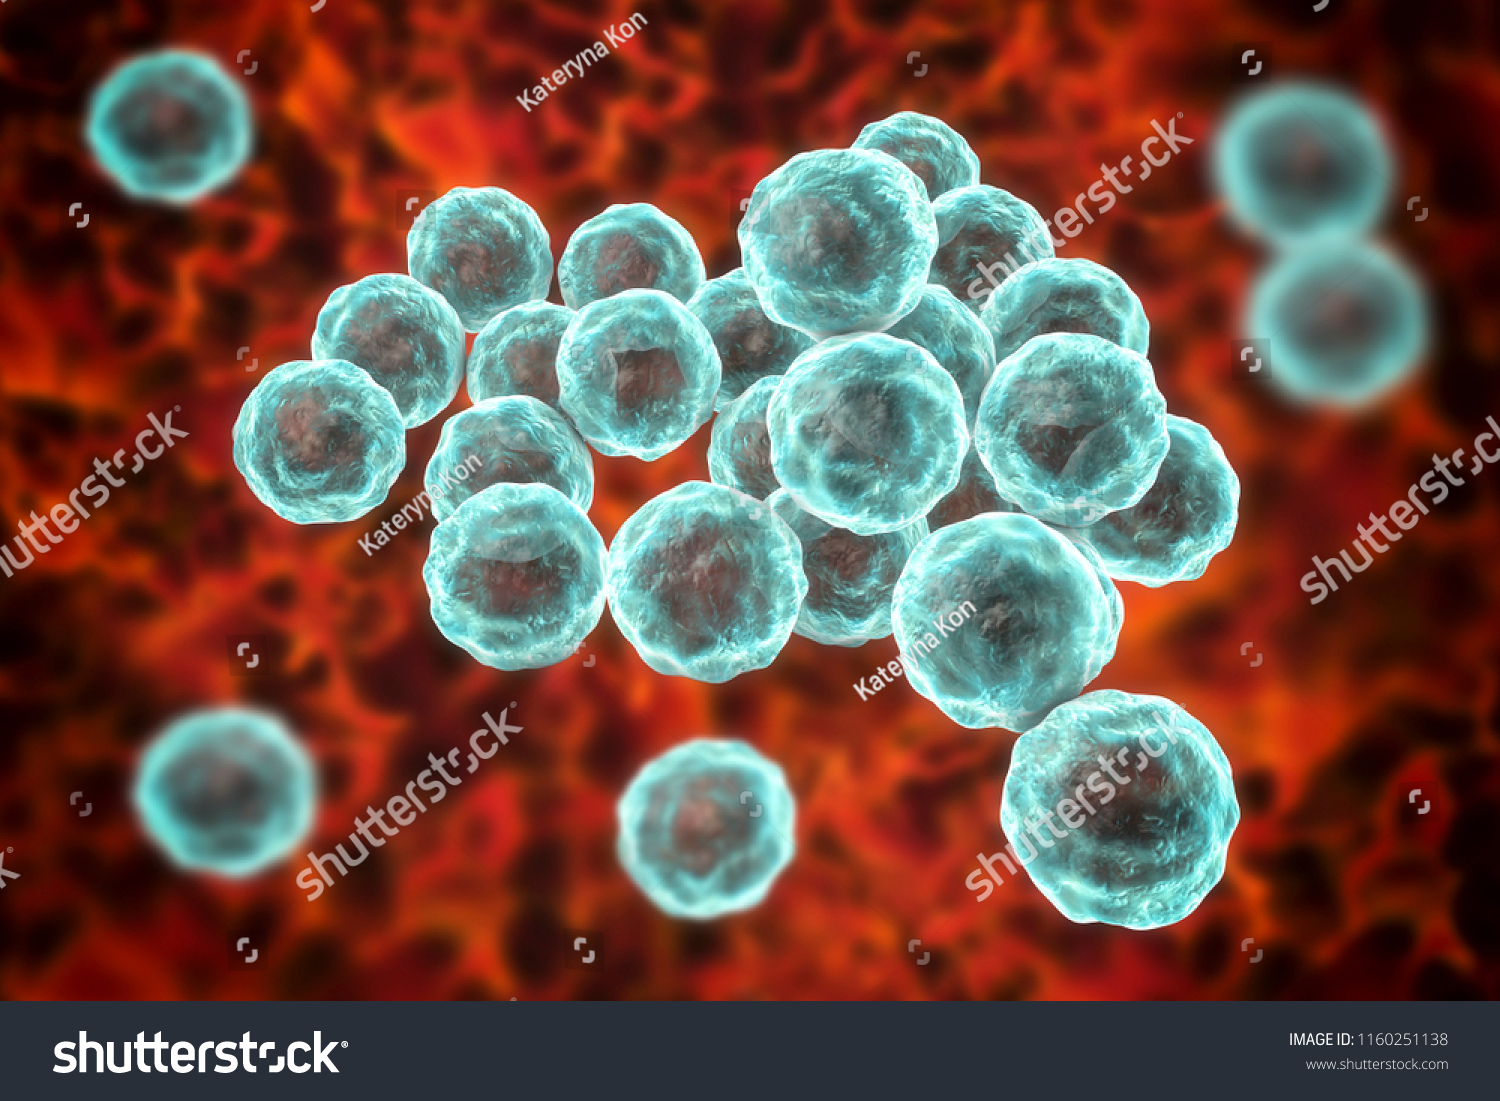 Chlamydia Trachomatis Bacteria 3d Illustration Causative Stock Illustration 1160251138 2423